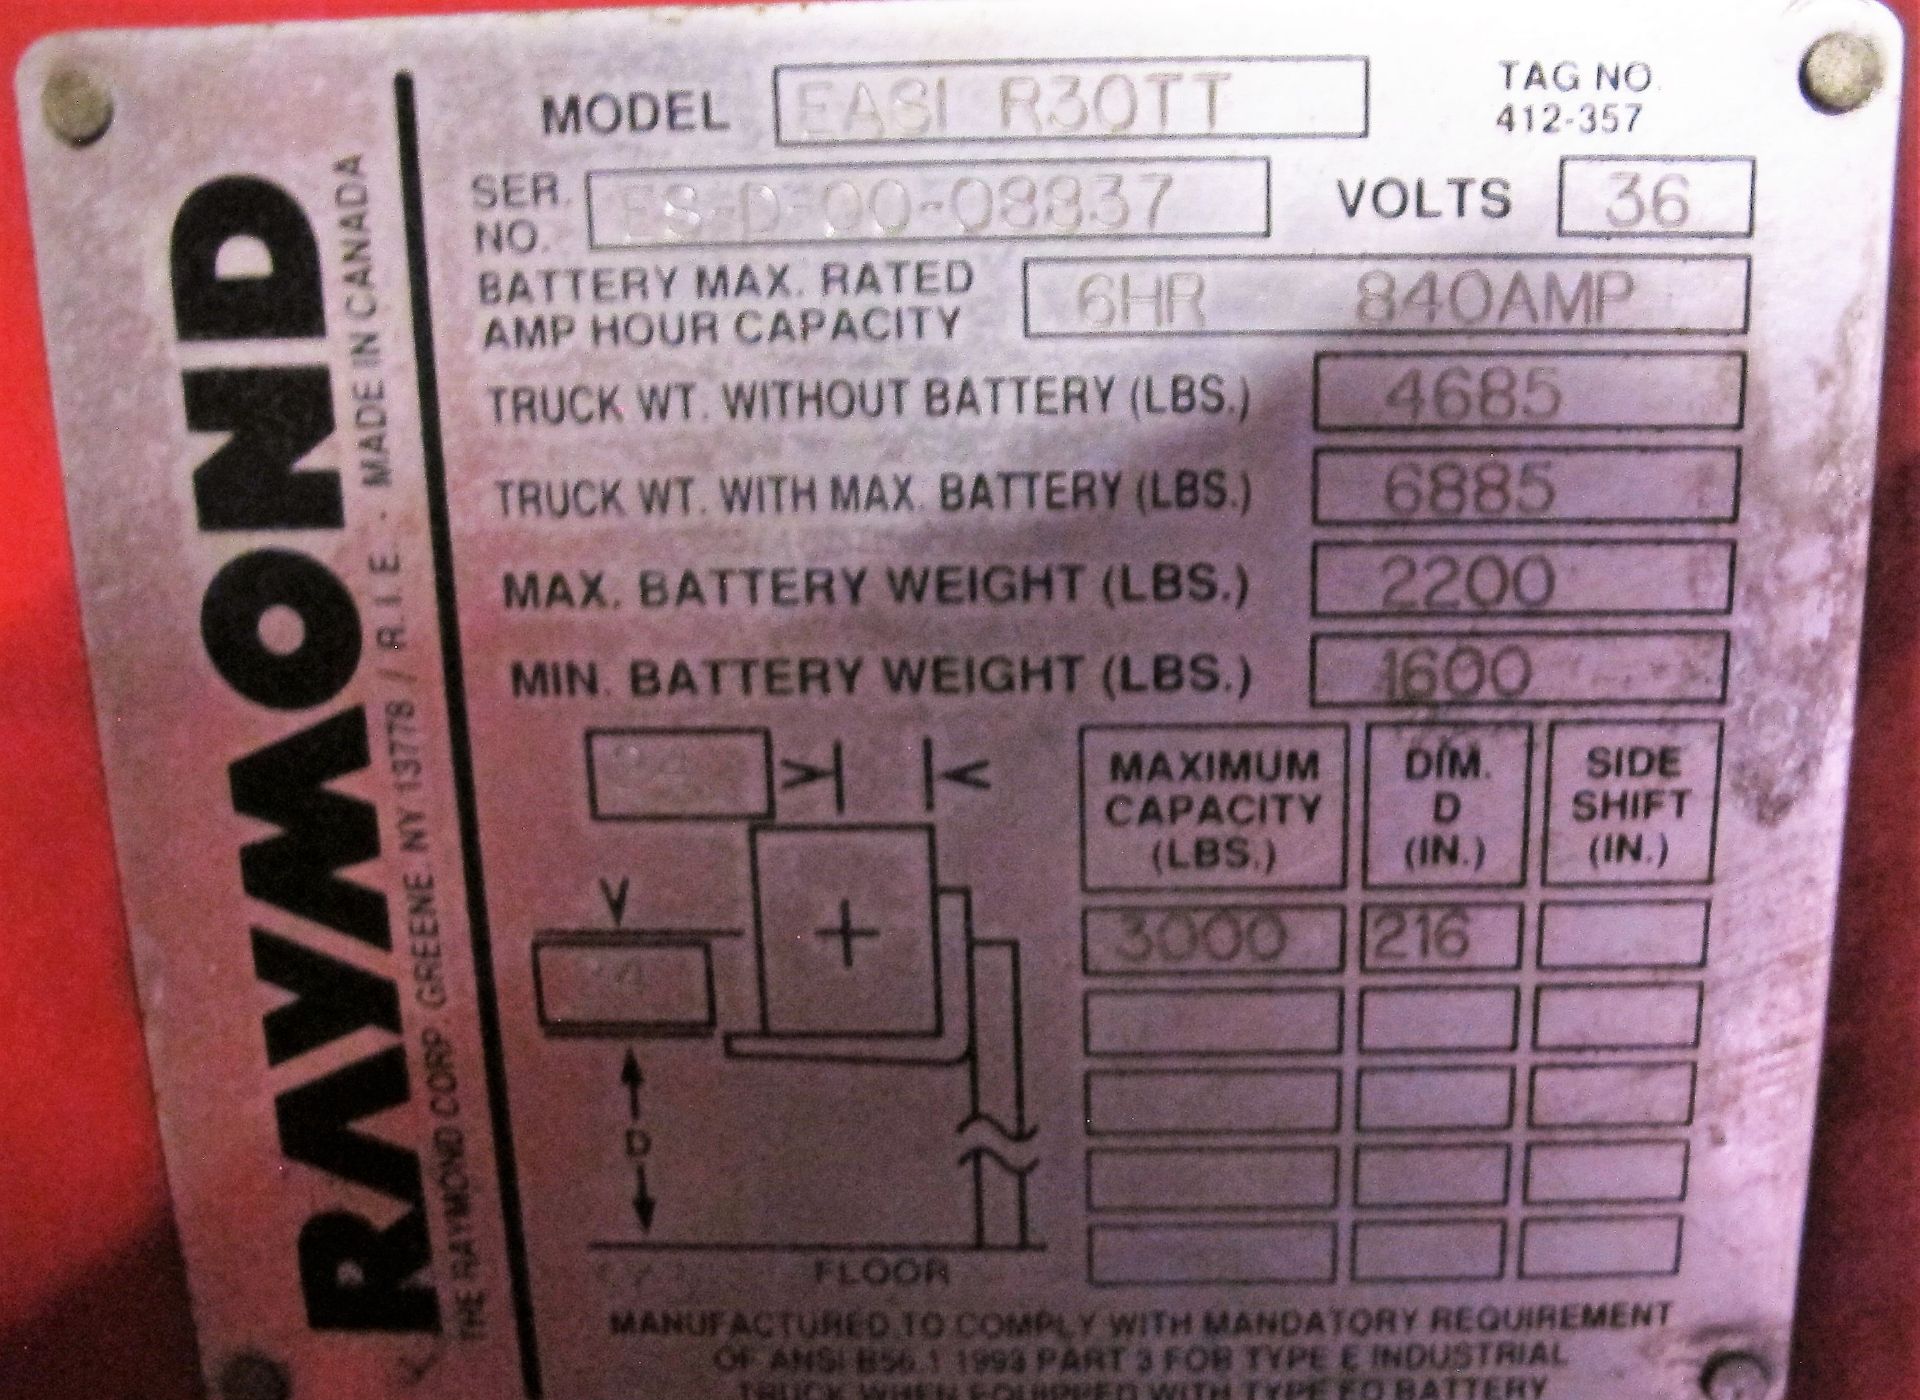 2000 RAYMOND EASI R30TT ELECTRIC REACH TRUCK, 3,000LB CAP., 216" MAX LIFT, 36V, 7' 11" MAST W/ - Image 4 of 6